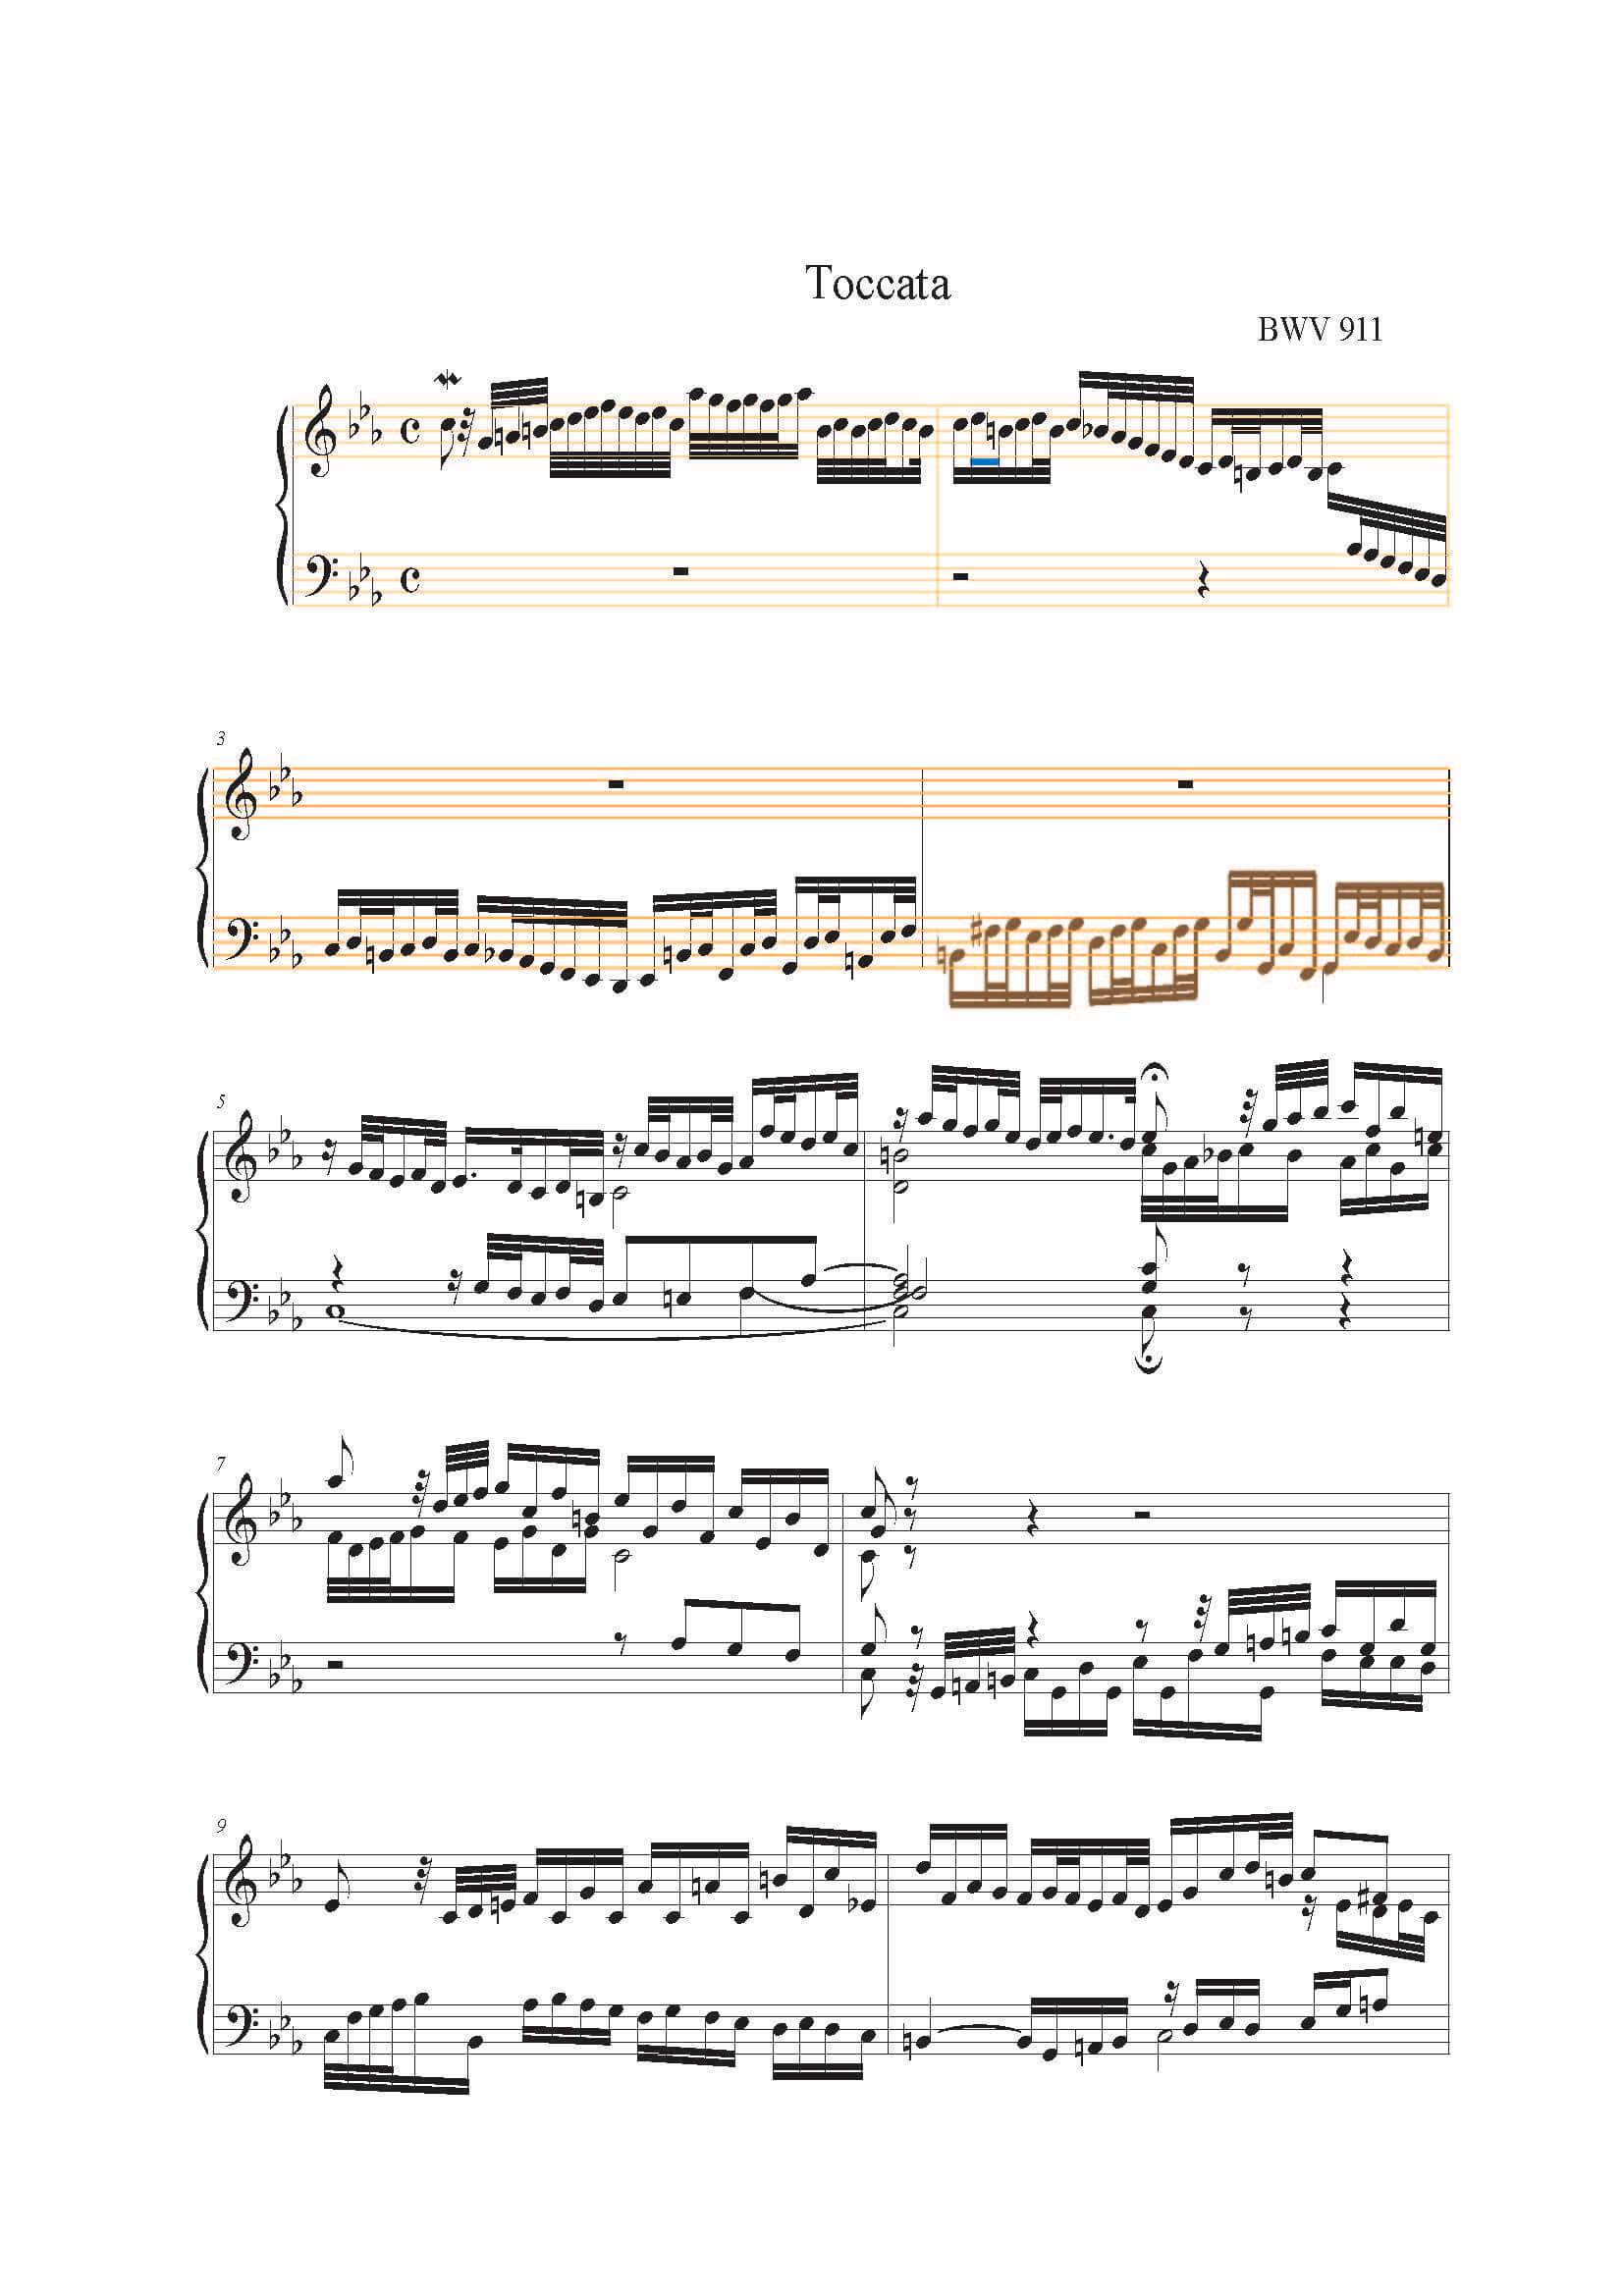 Toccata BWV 911 - Analyse Musicale - CHARLIER C. - app.scorescoreTitle